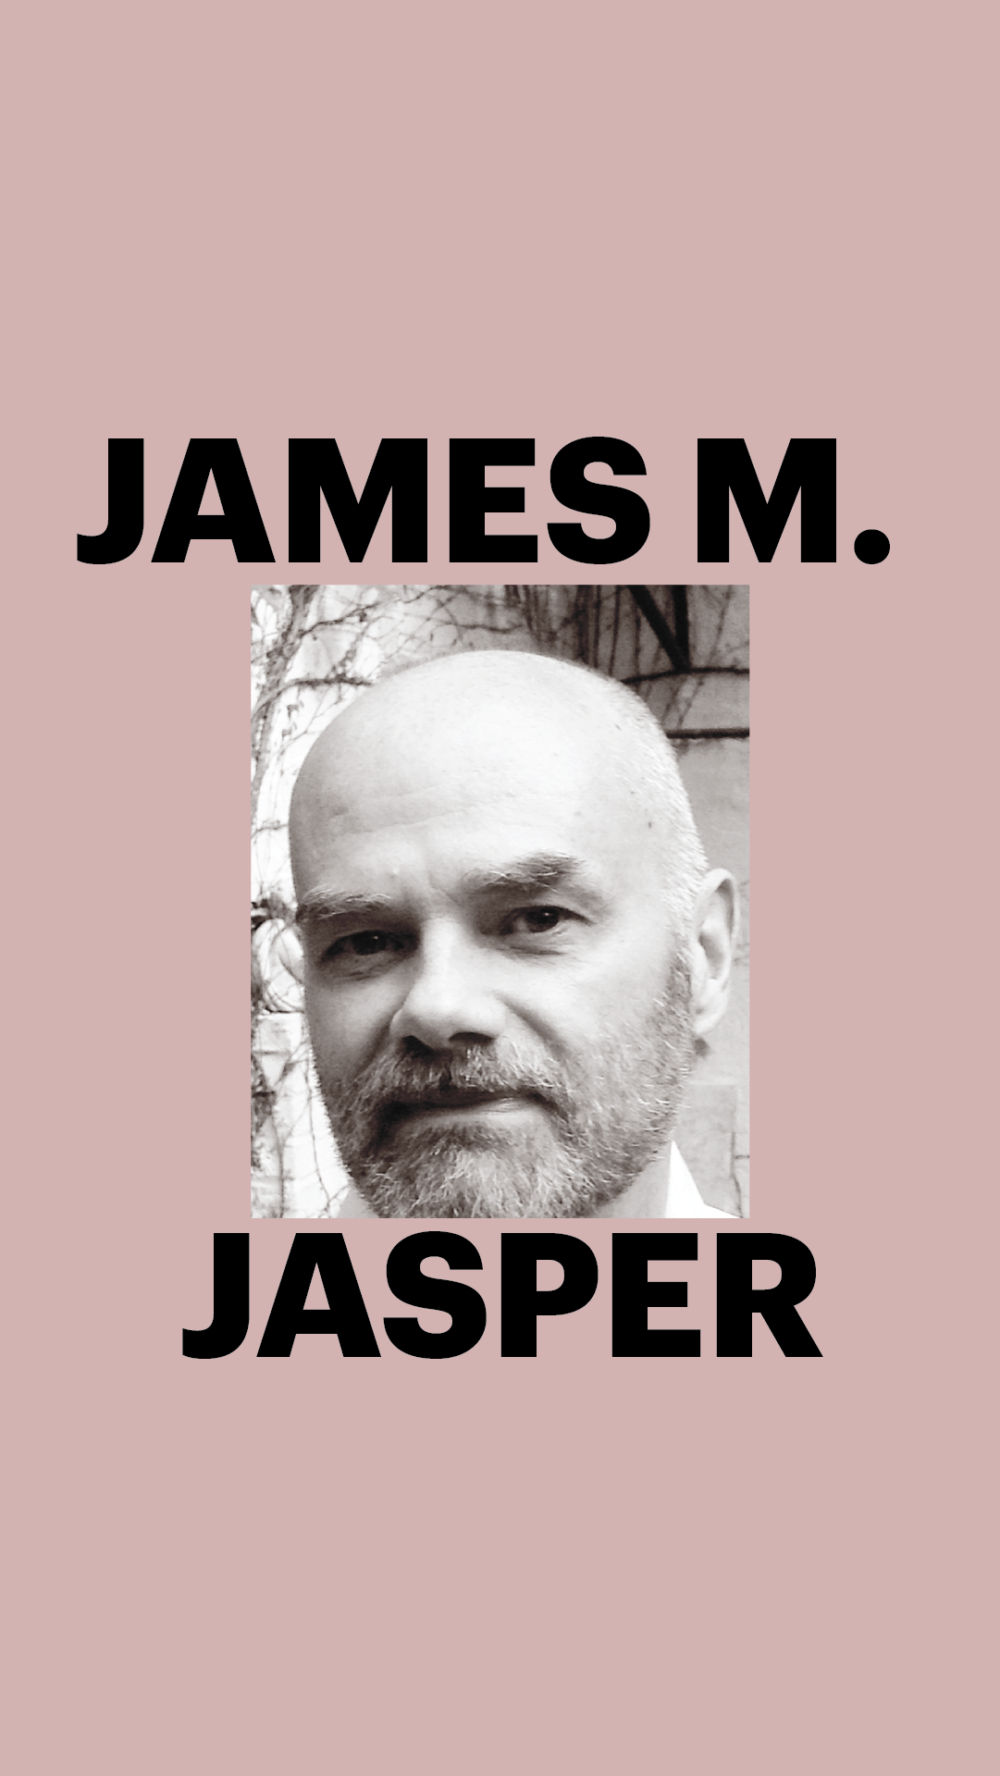 conversation with James Jasper